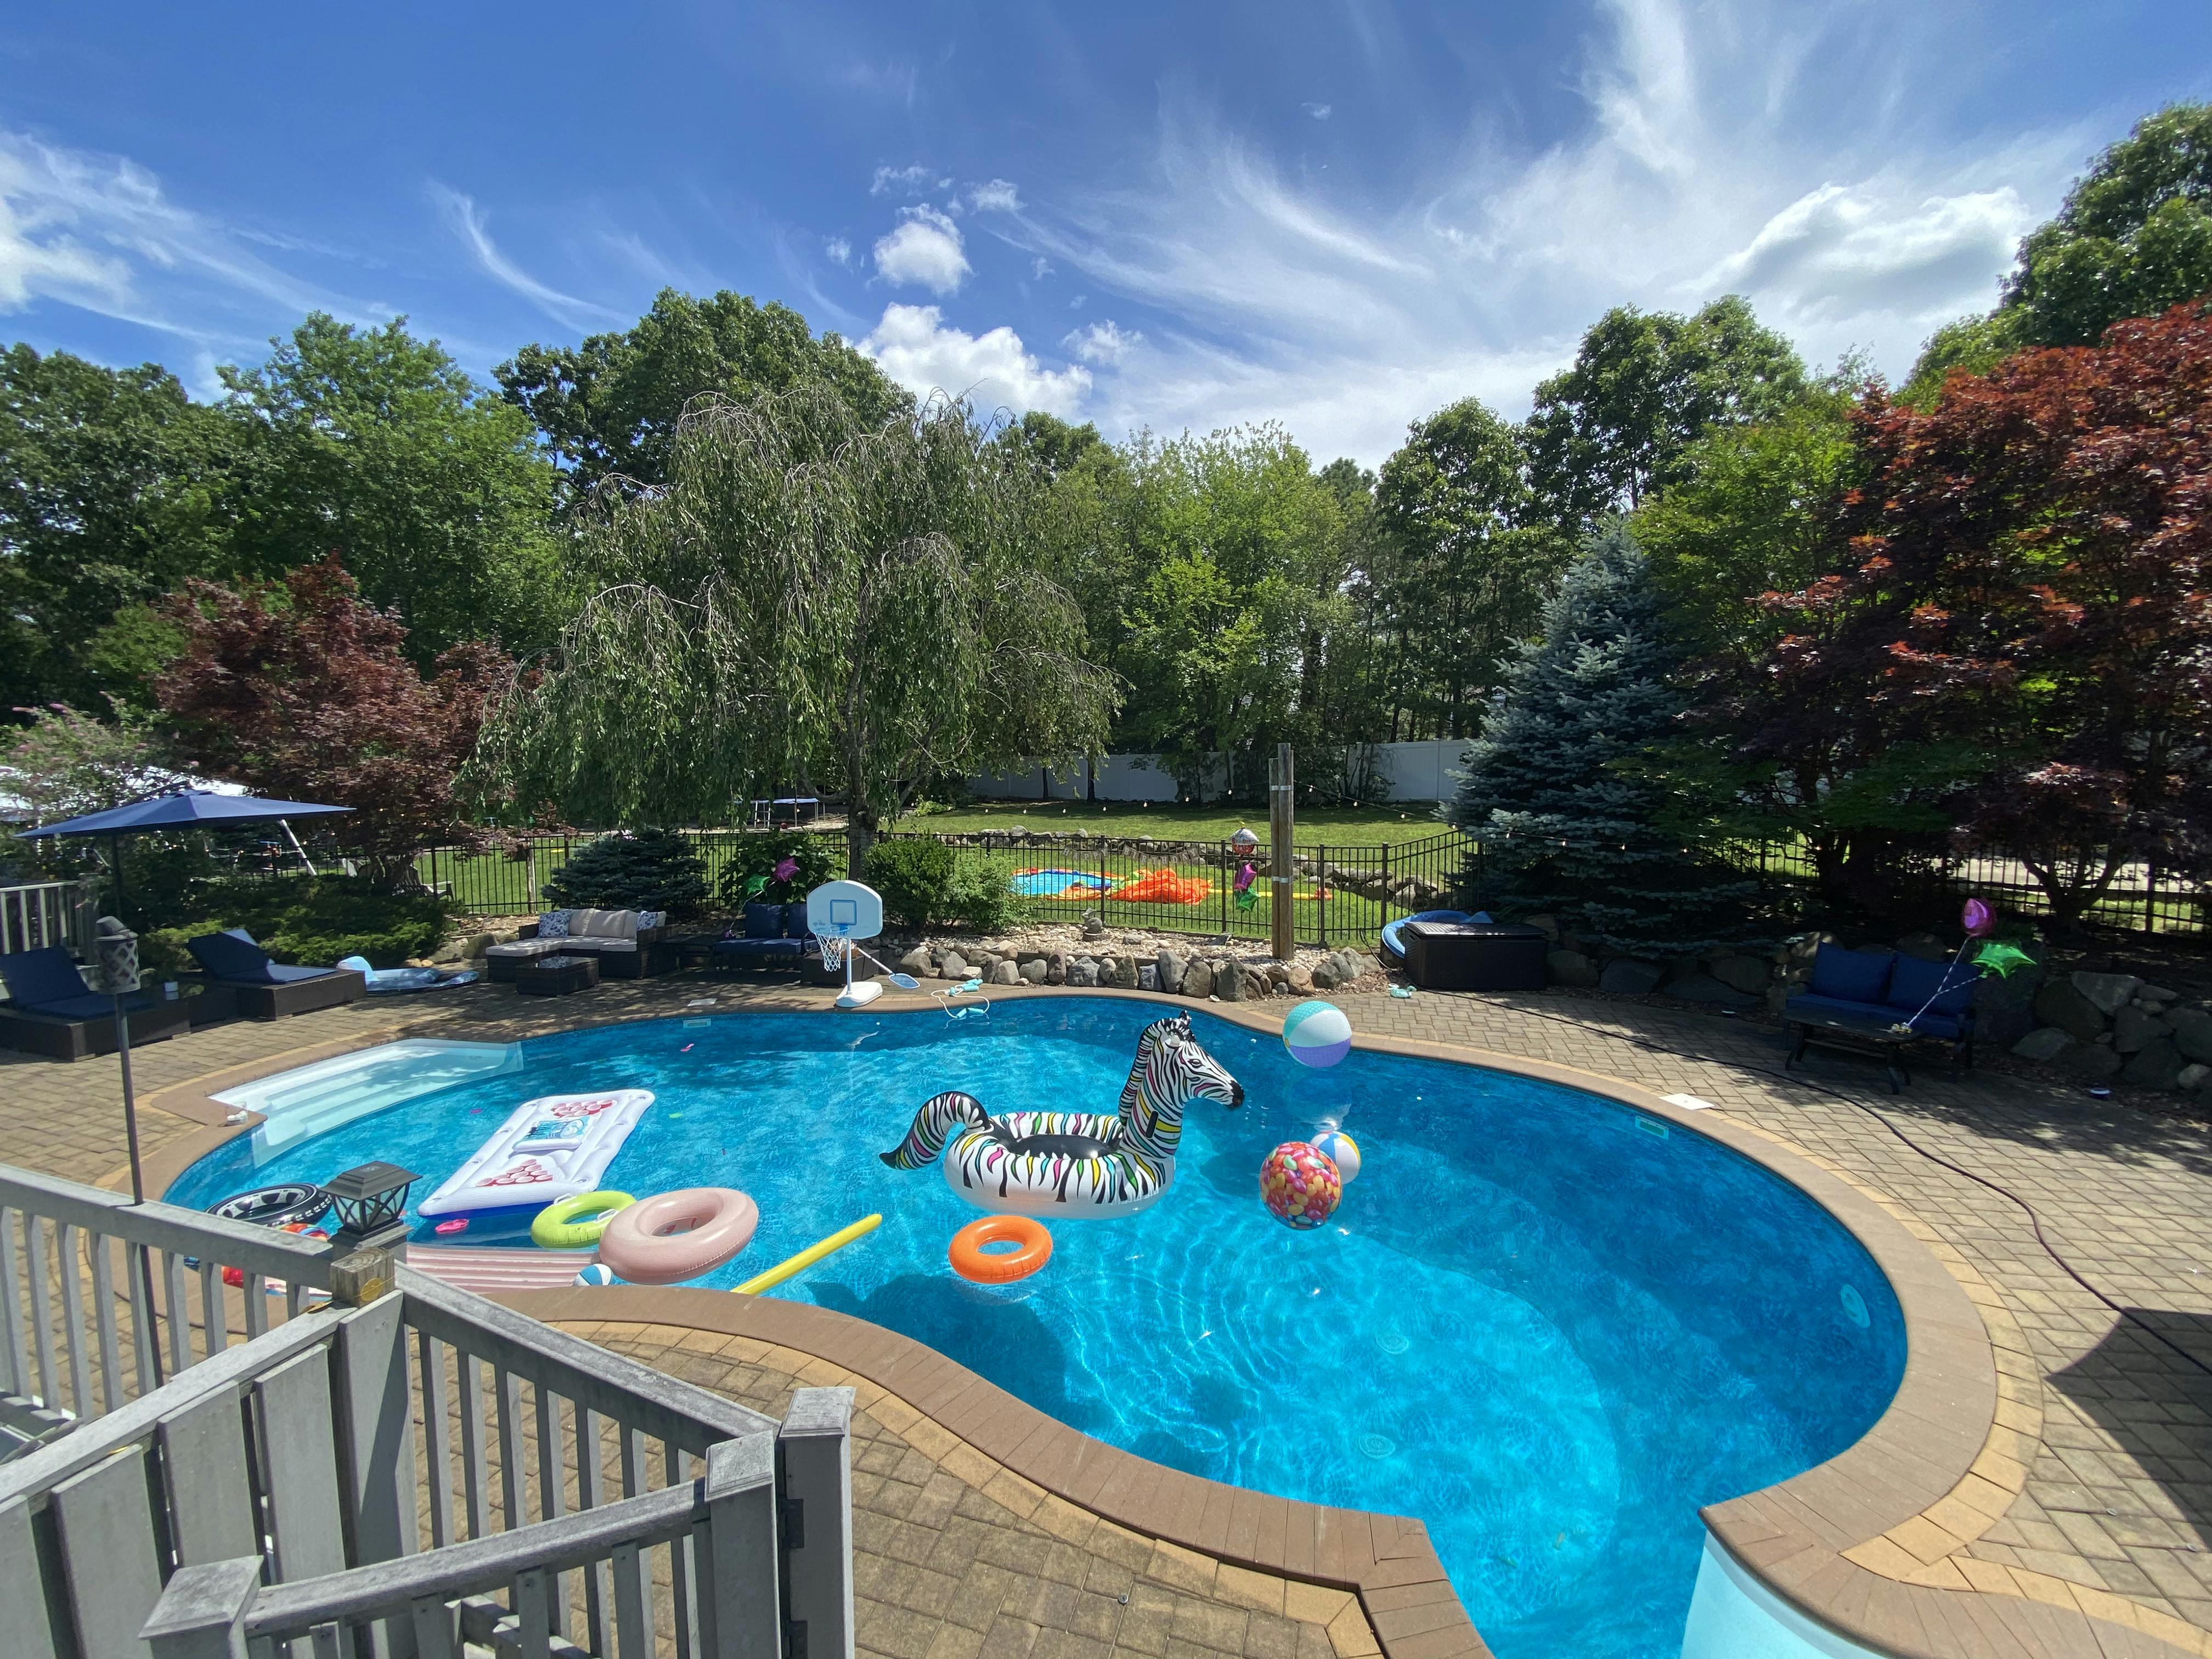 Resort Like Custom Pool And Large Backyard - Rent a private pool in Lake Grove, New York